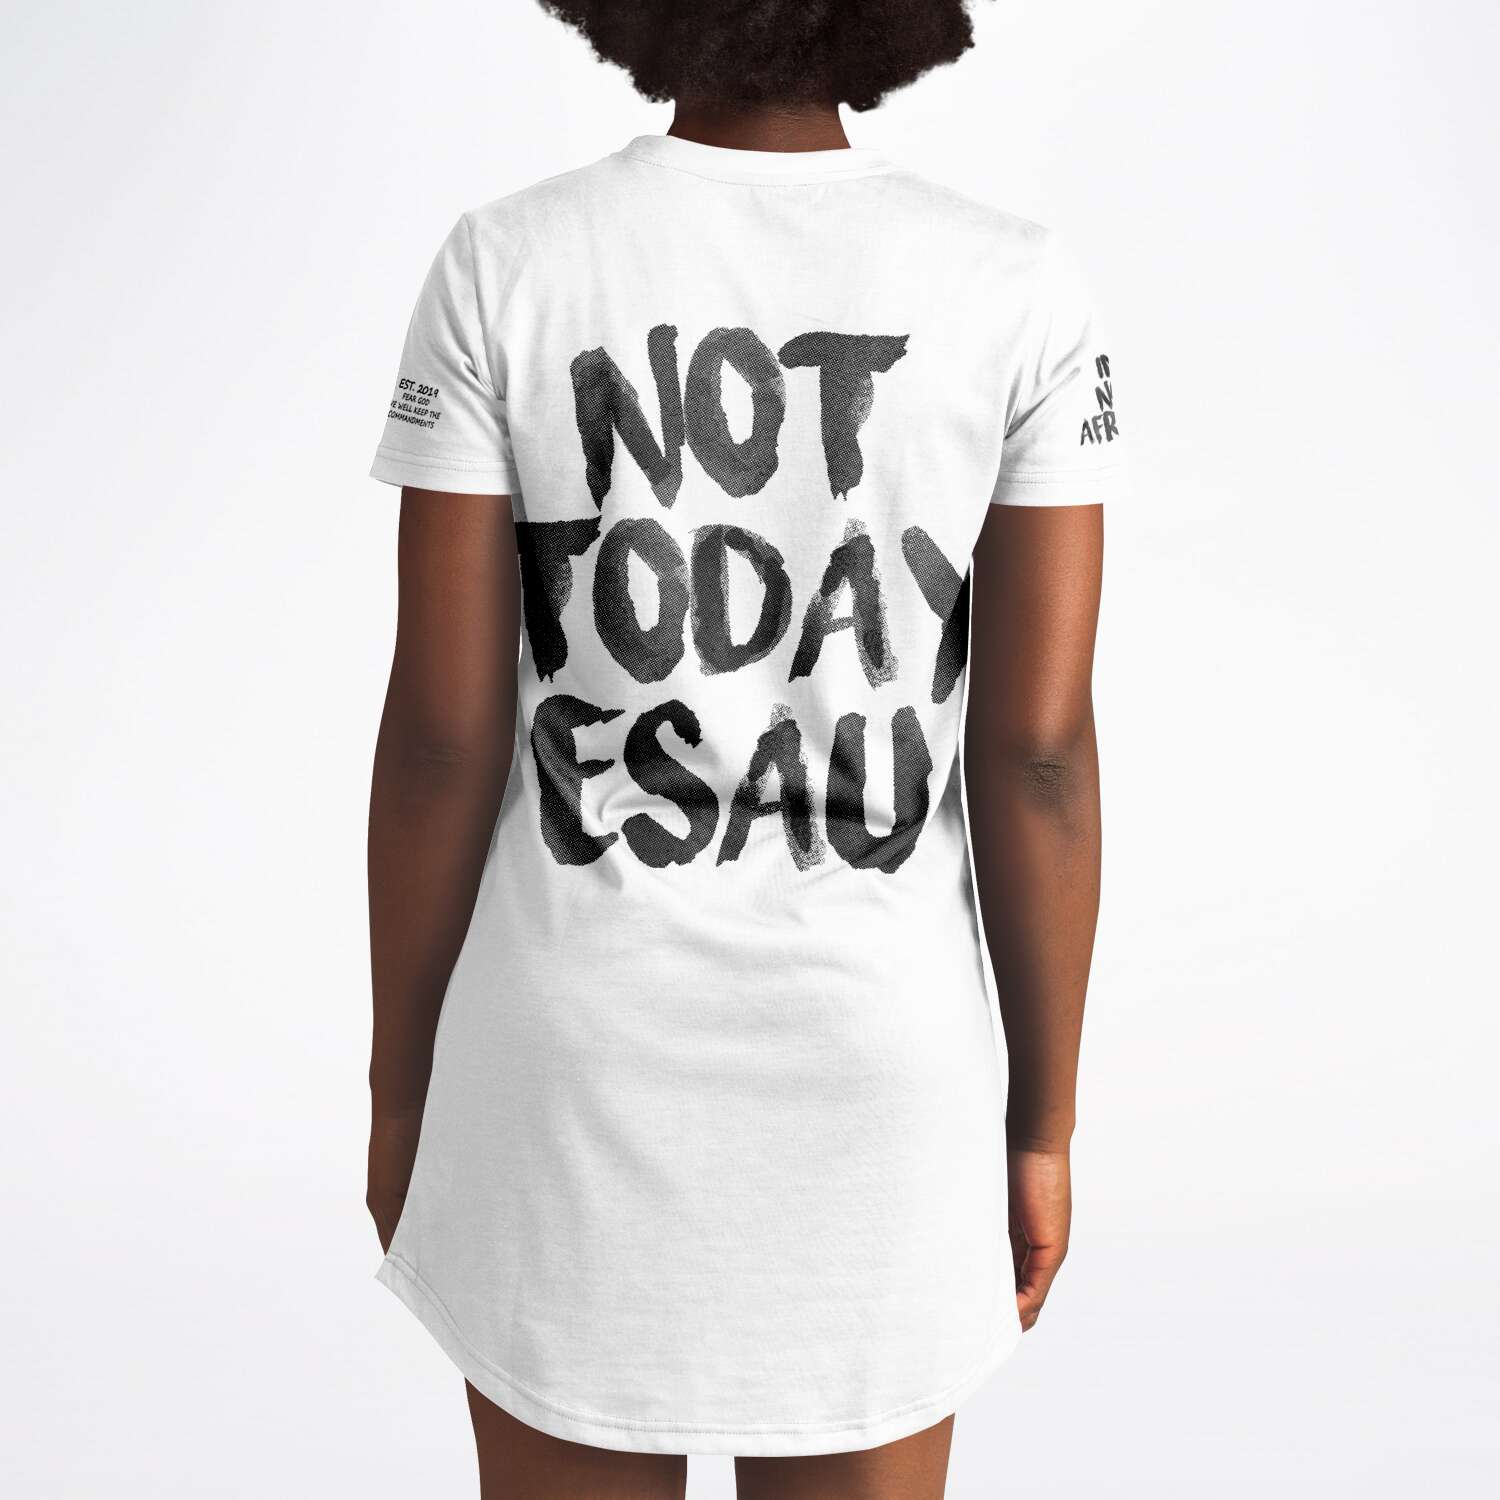 Hebrew Israelite Women's "Not Today Esau" Premium Jersey T-shirt Dress